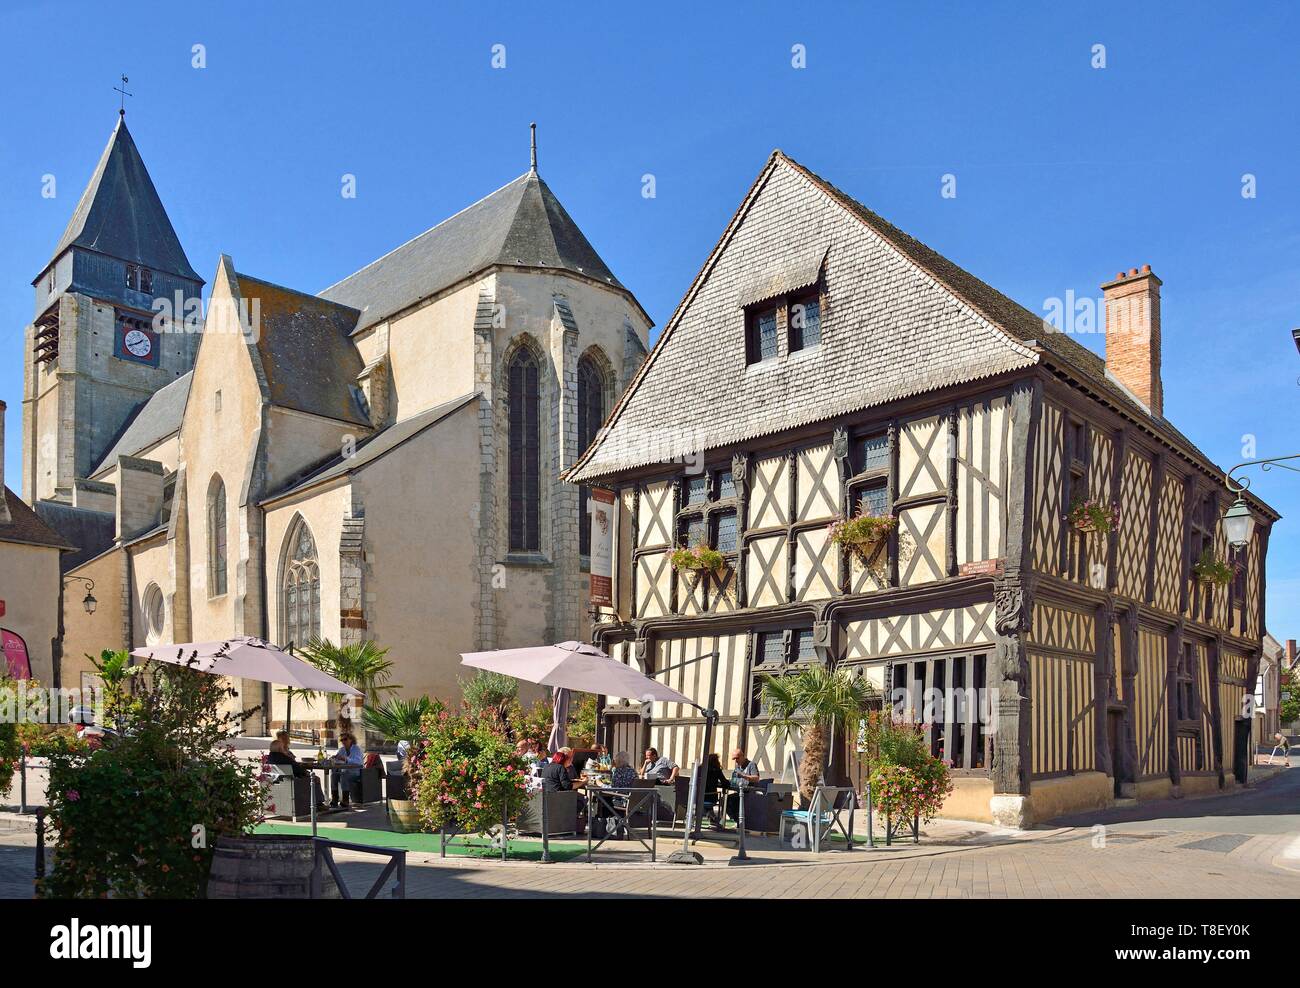 Francia, Cher, la Sologne, Aubigny sur Nere, stud house conocido como Franþois 1er (siglo xvi) Foto de stock